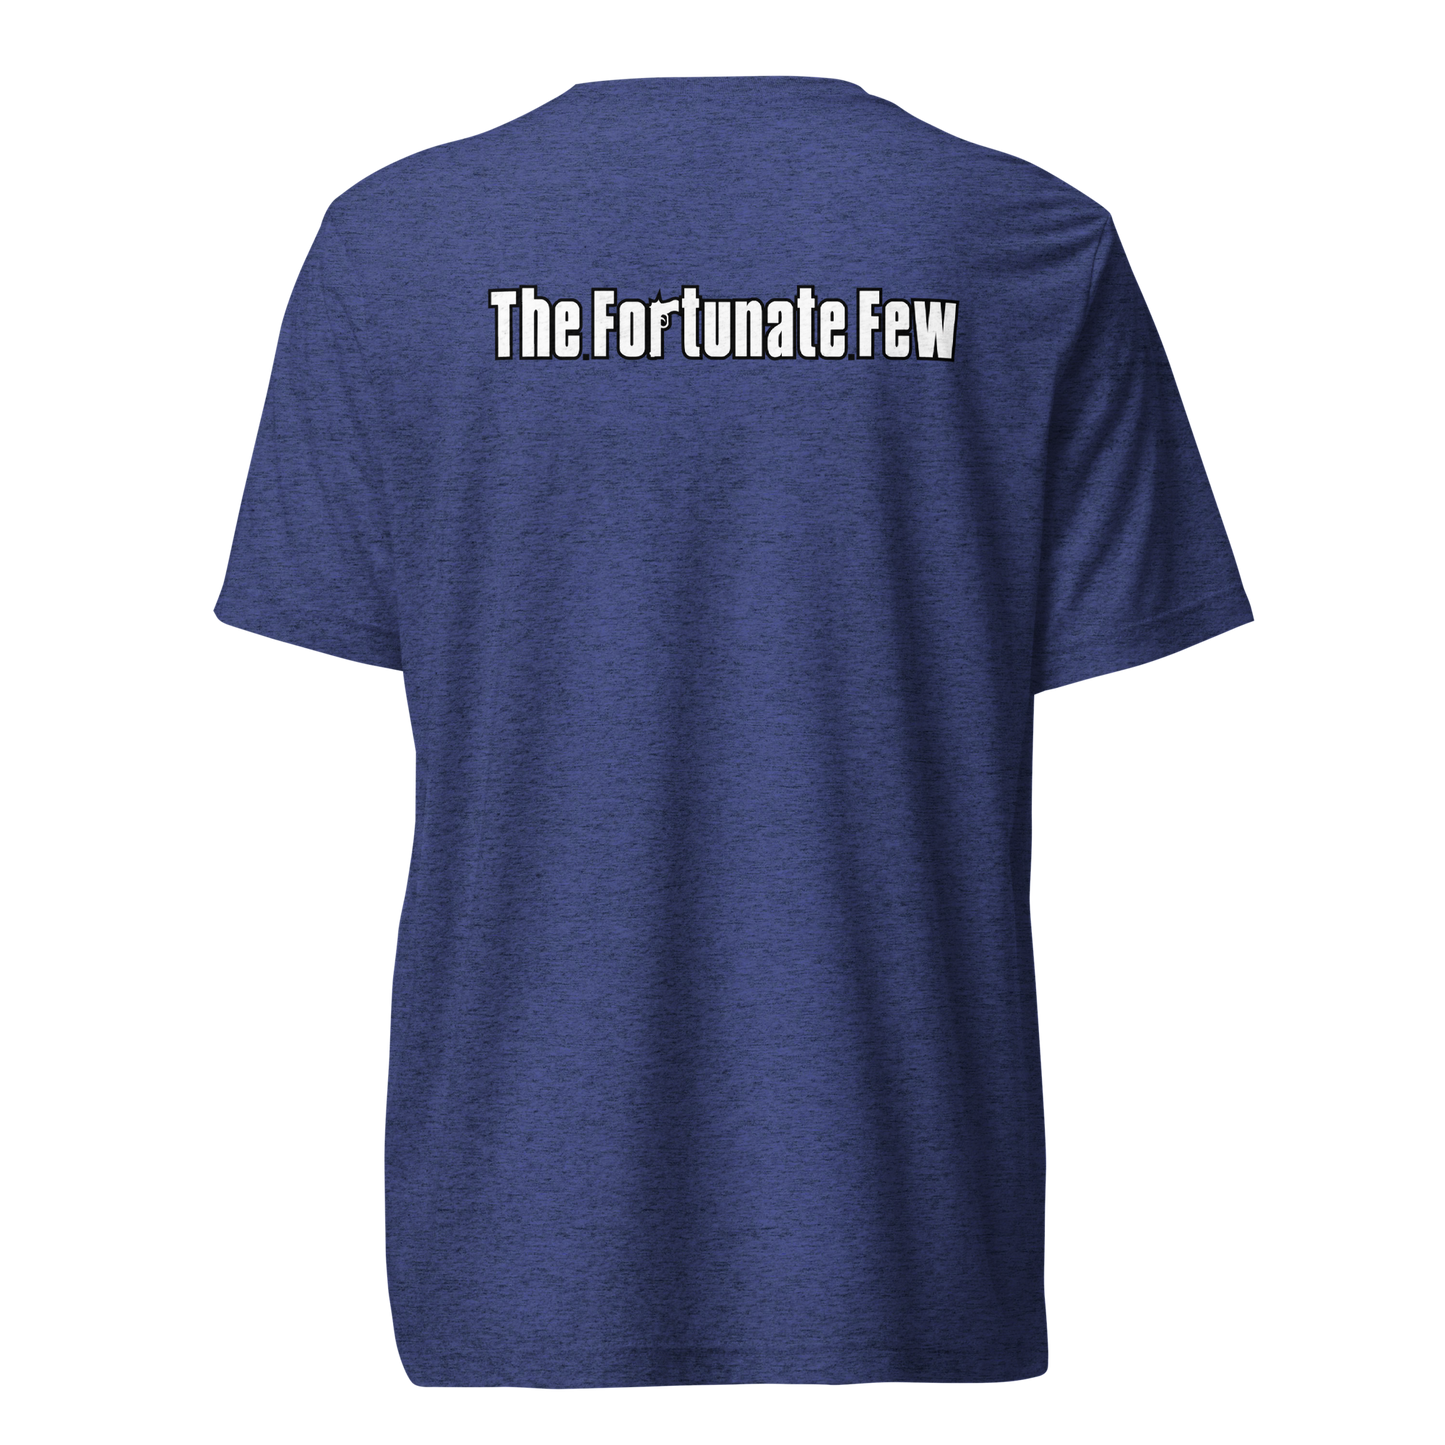 FFSC Super Soft Short sleeve t-shirt with back print